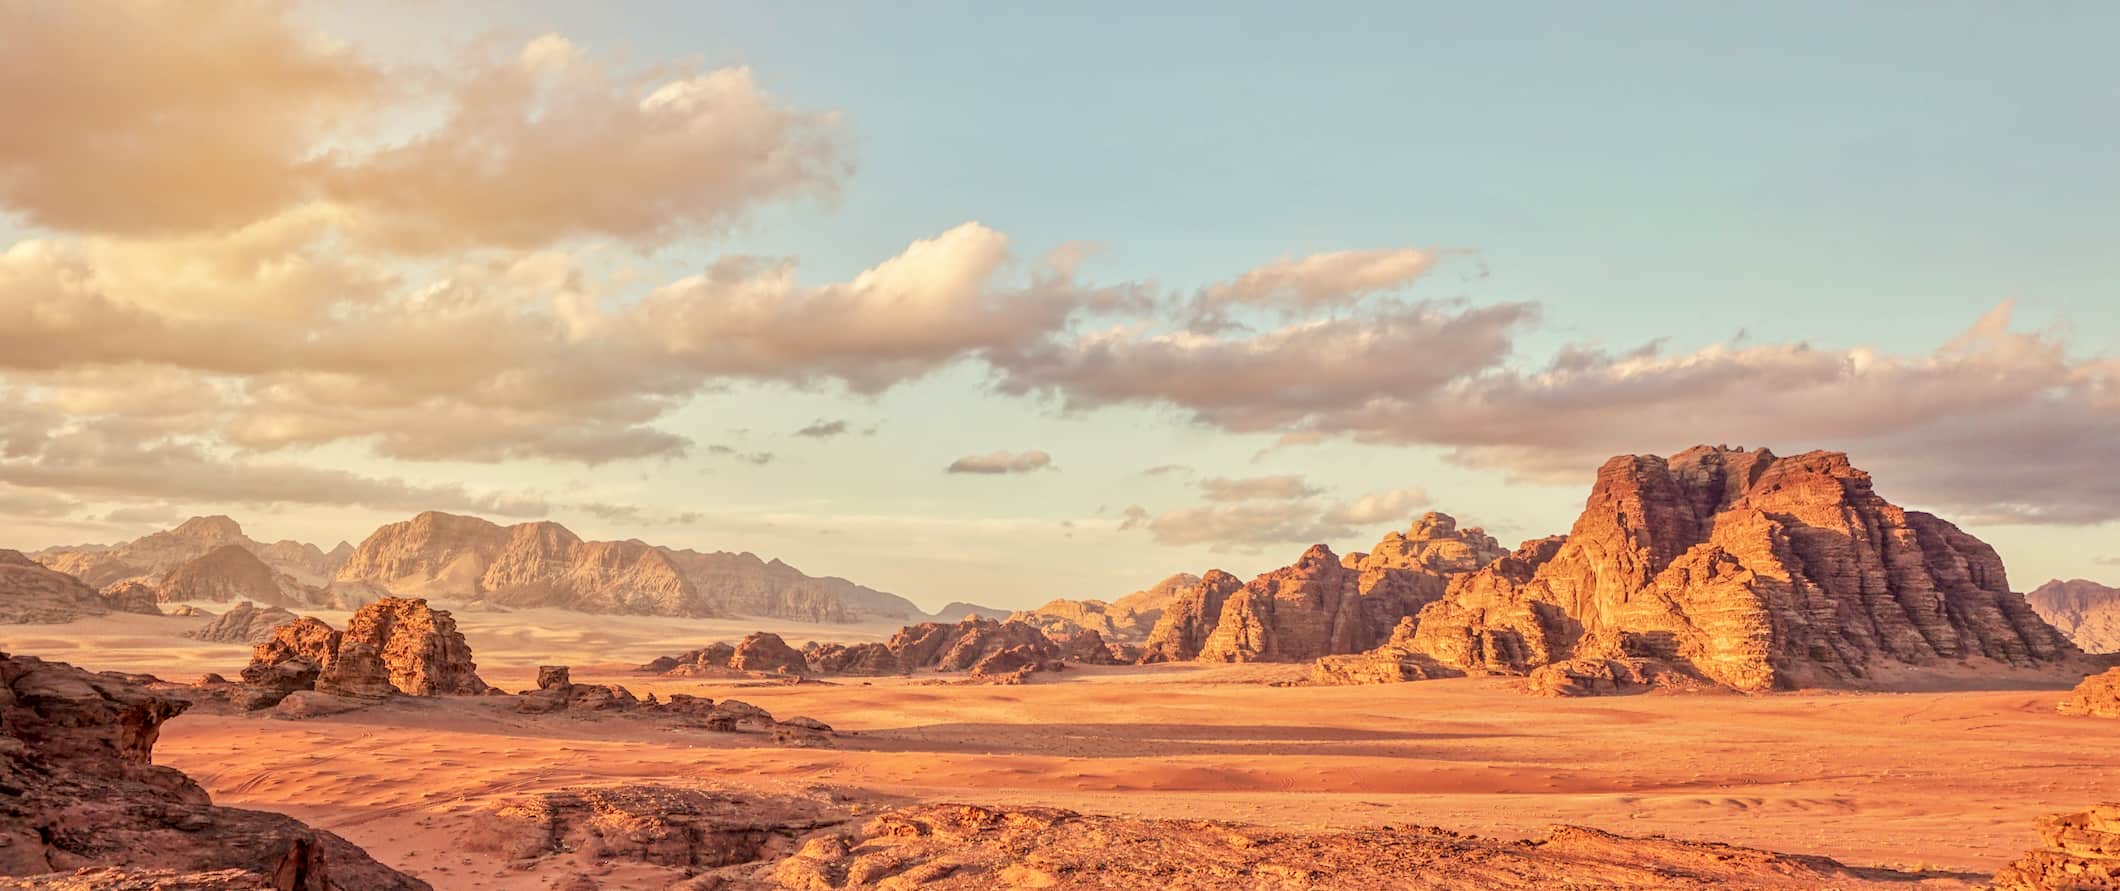 The rugged, desert landscape of Wadi Rum in Jordan sprawling into the horizon